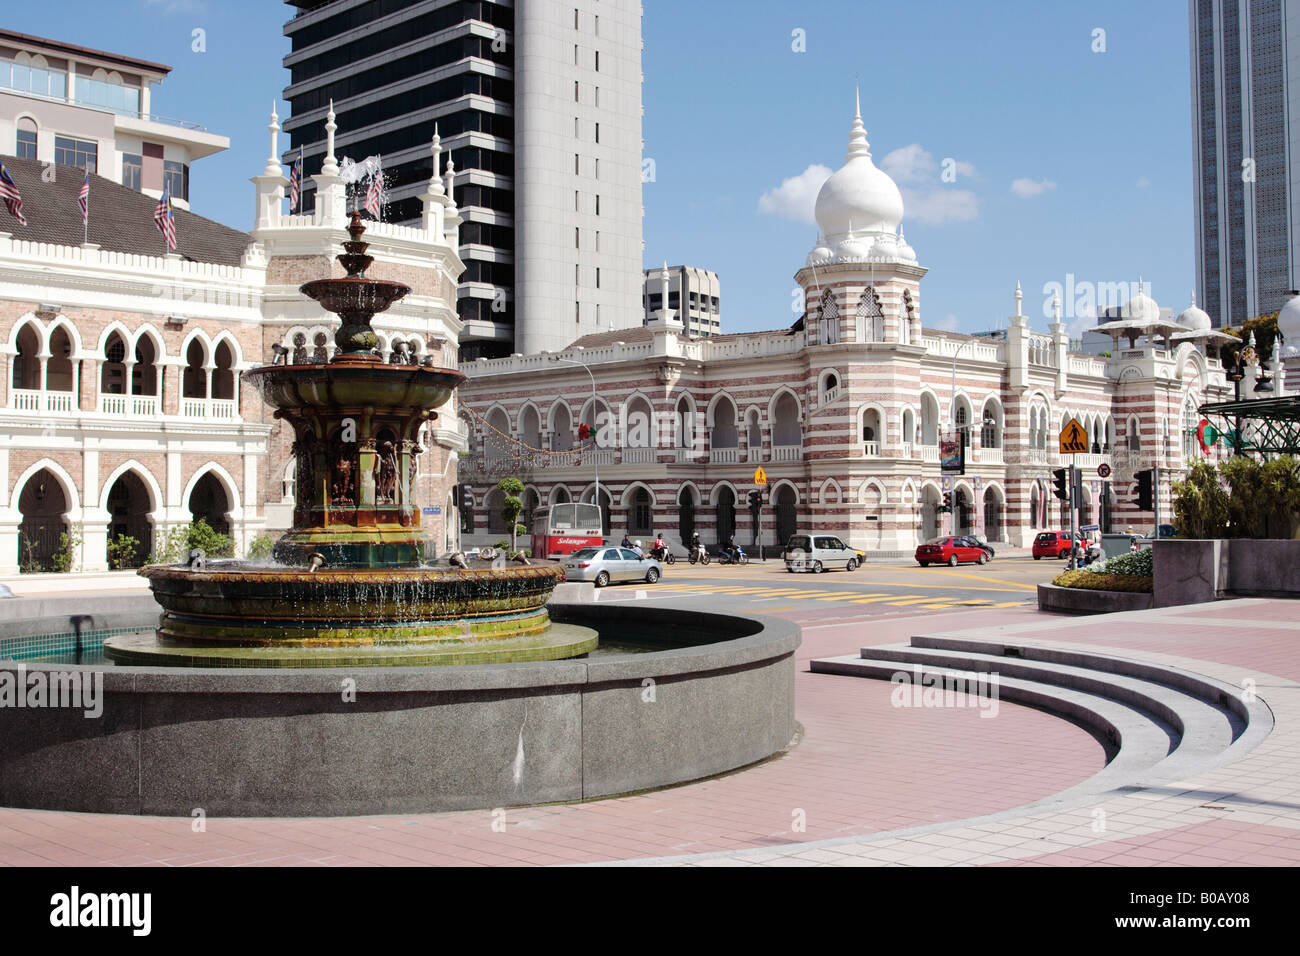 Water fountain and Moorish architecture in the city of Kuala Lumpur, Malaysia. Stock Photo